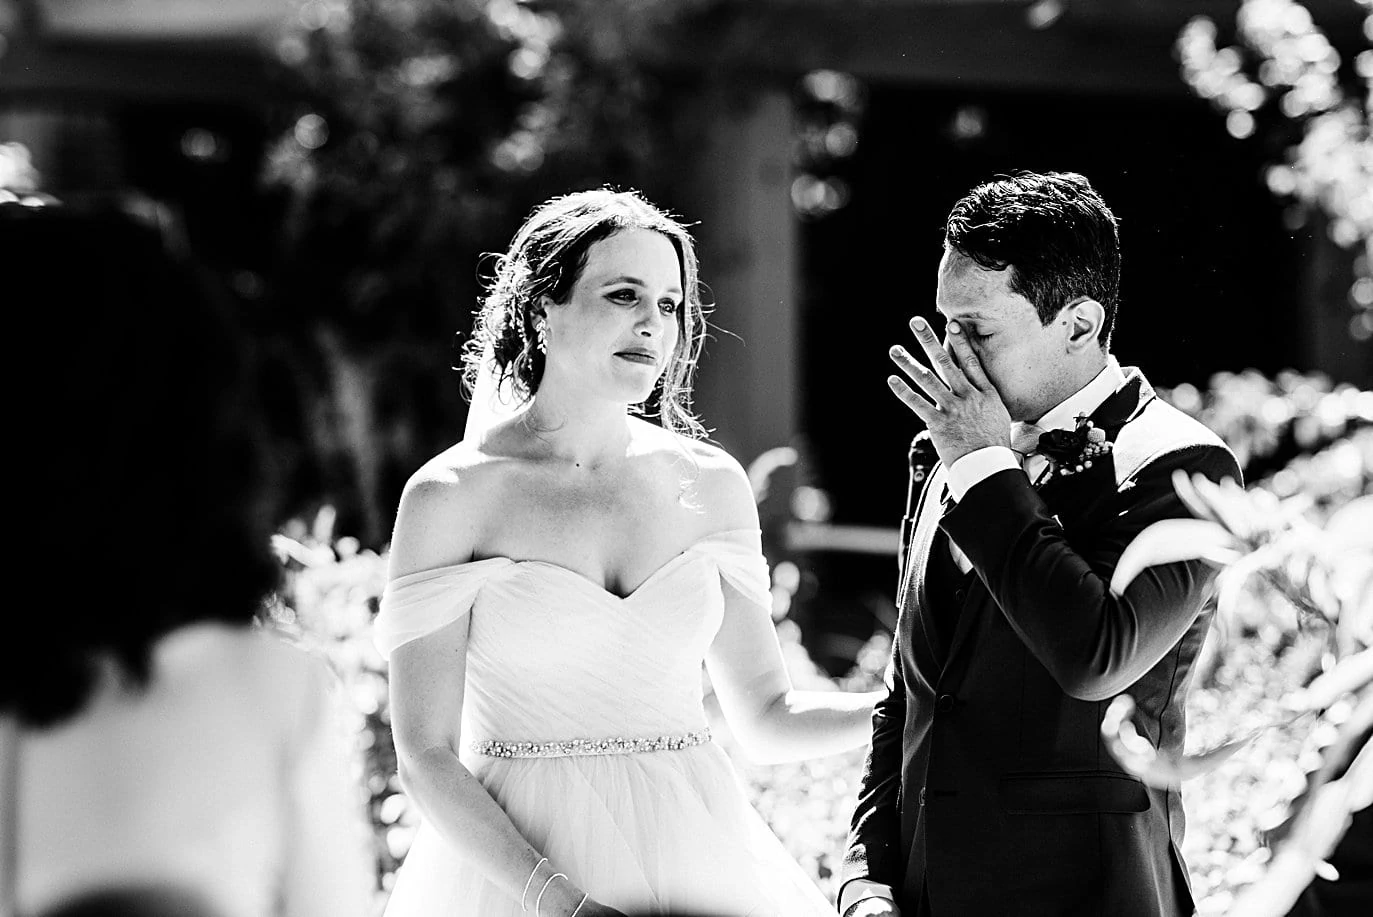 groom wipes away tears during self-solemnized wedding ceremony at Denver Botanic Gardens microwedding by Denver wedding photographer Jennie Crate